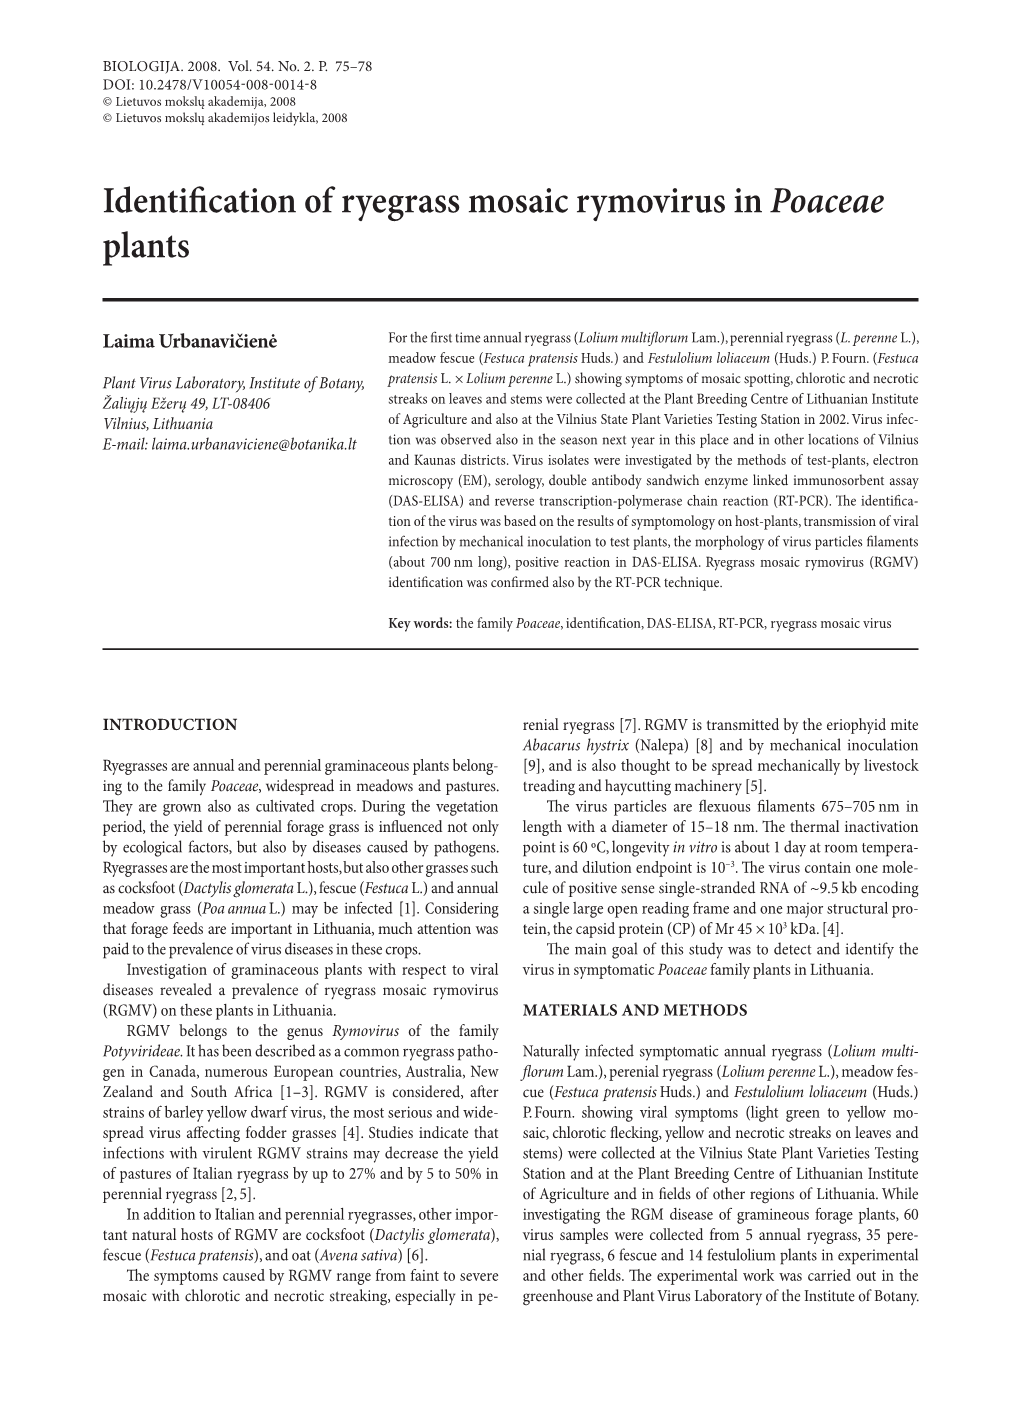 Identification of Ryegrass Mosaic Rymovirus in Poaceae Plants